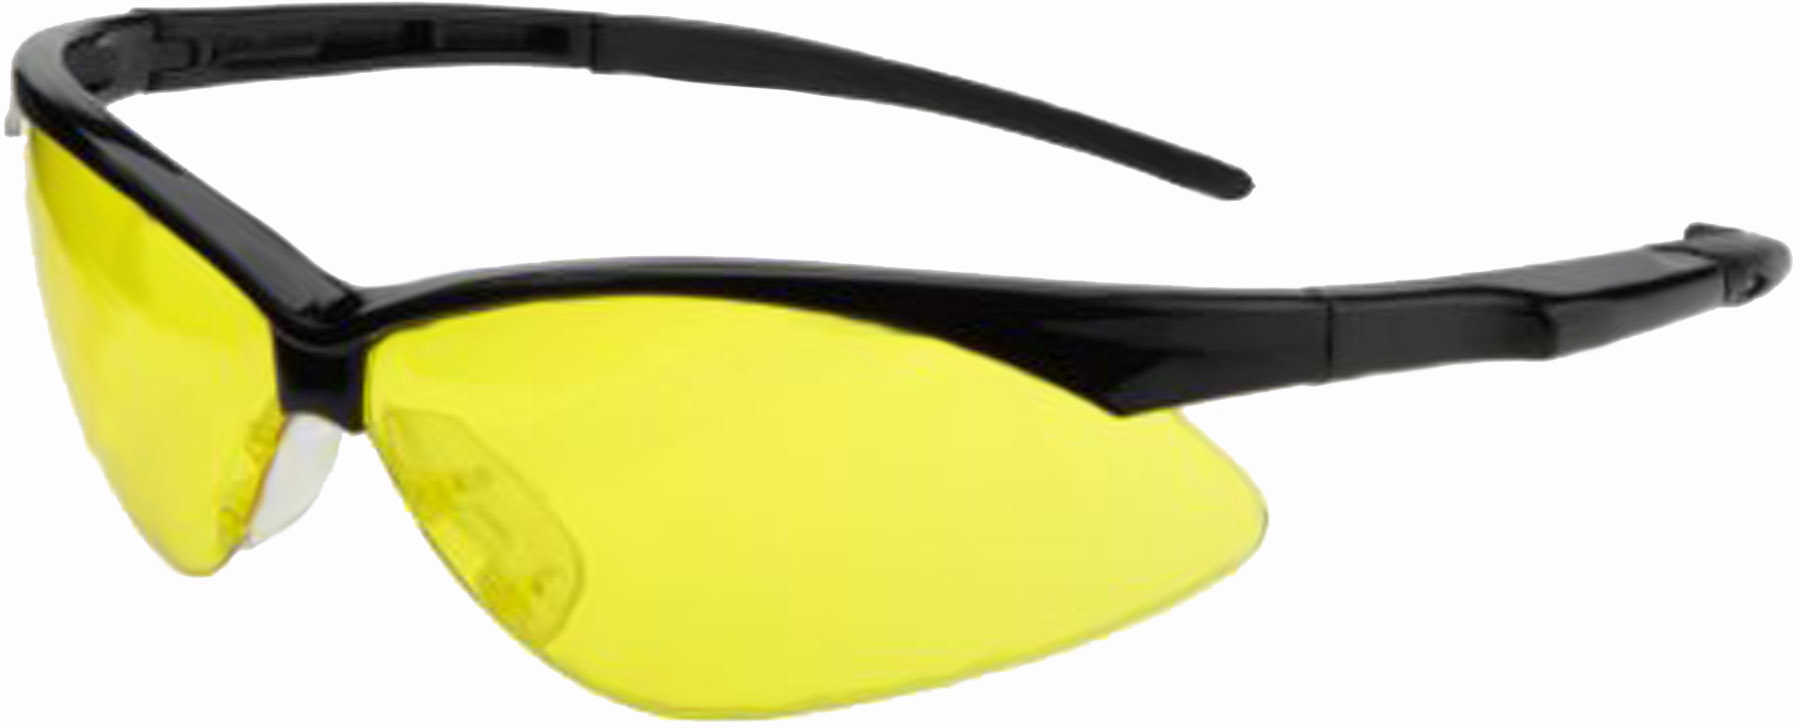 Radians Outback Glasses Black Frame Amber Lens With Cord OB0140CS